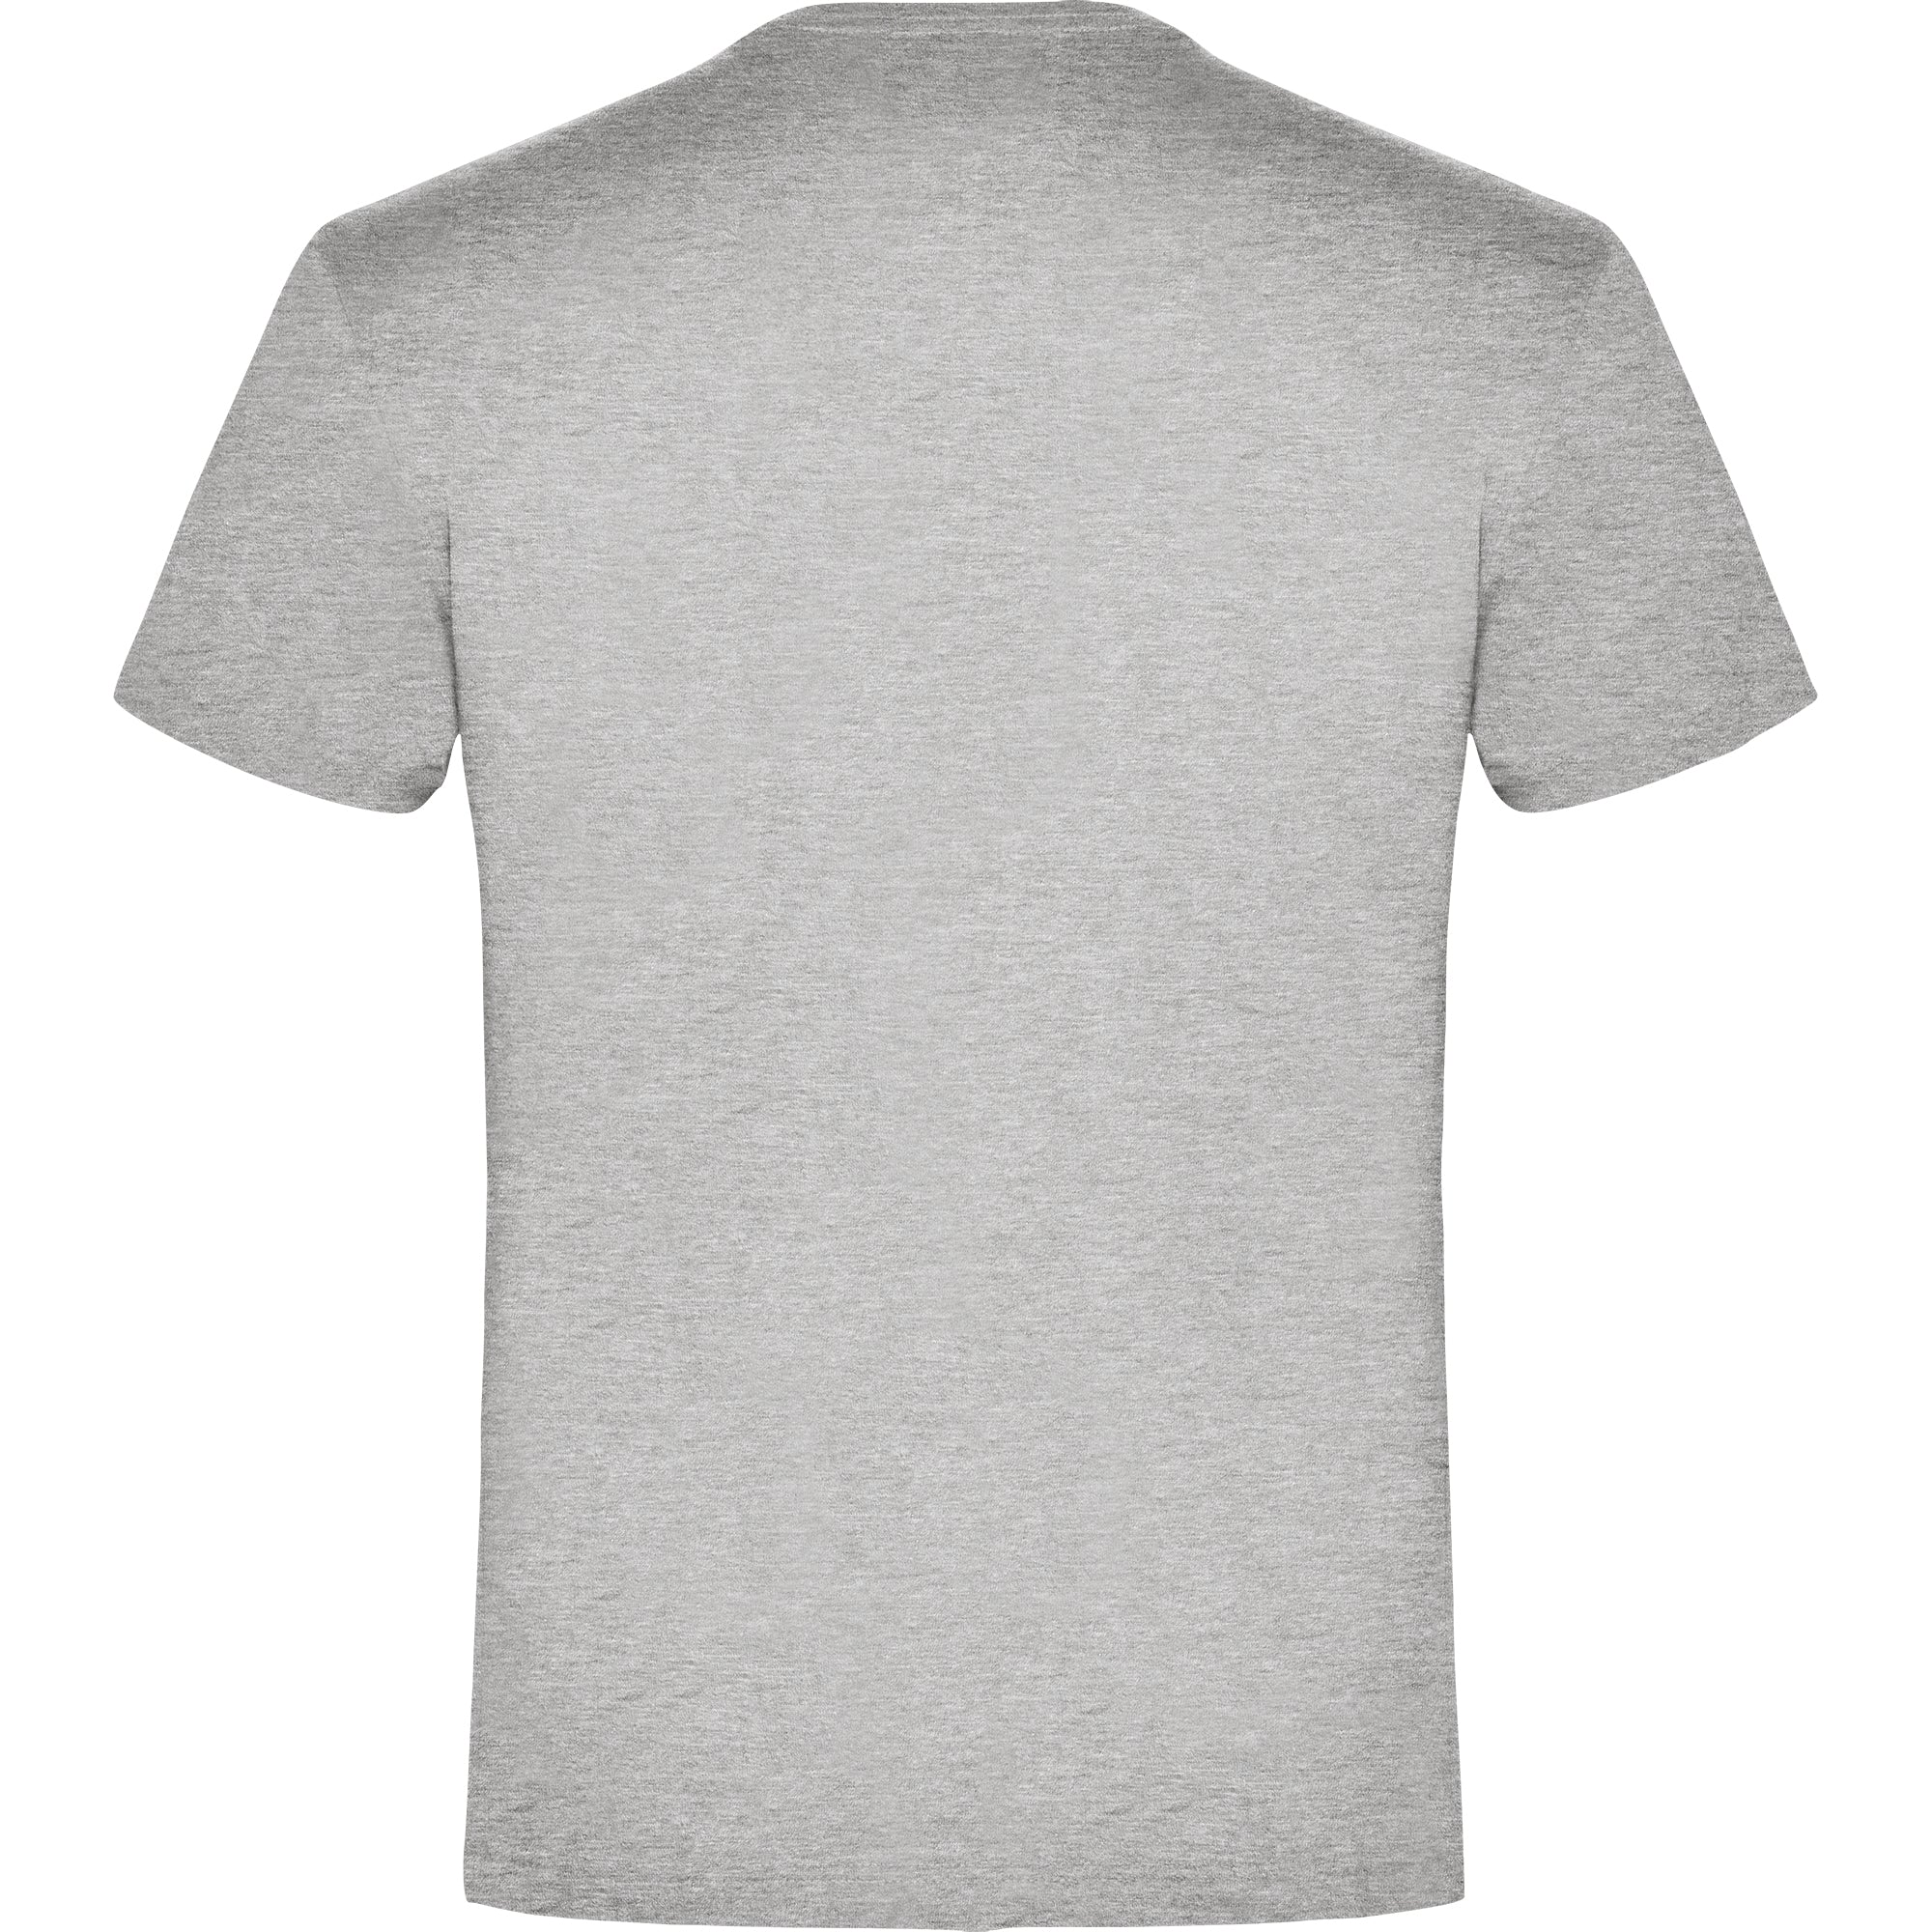 Camiseta manga corta con bolsillo - Dipovips